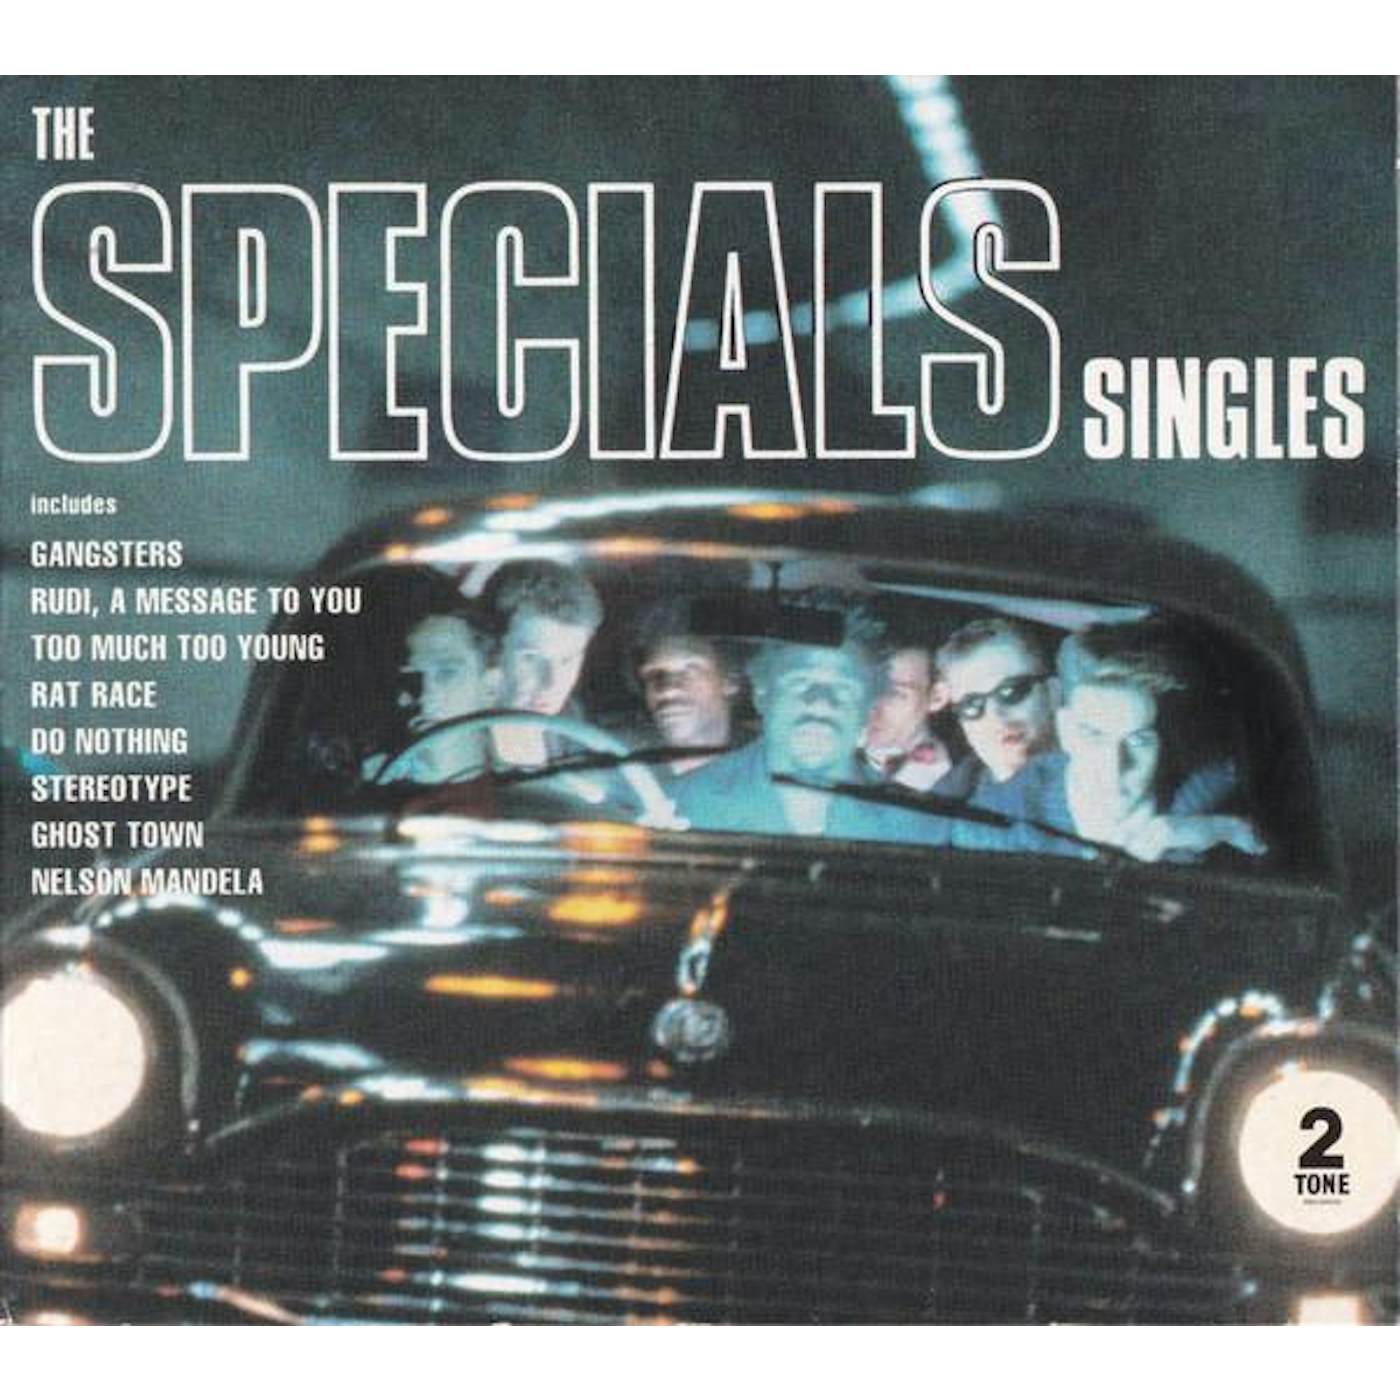 The Specials (2015 REMASTER) CD